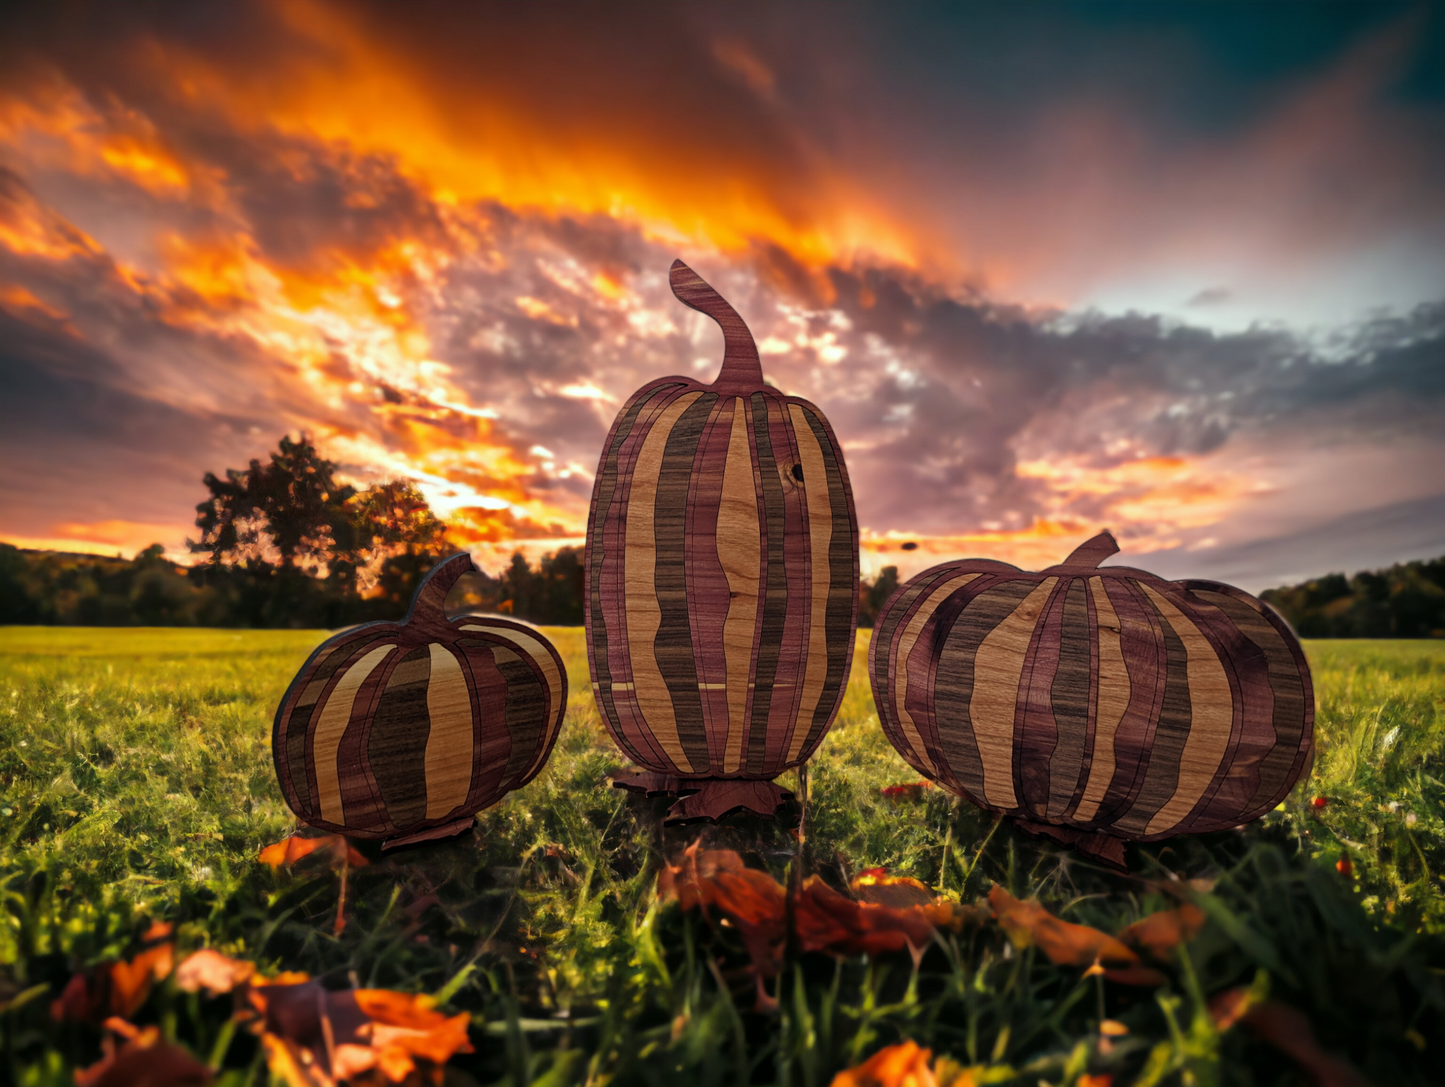 Set of 3 Woodgrain Pumpkins